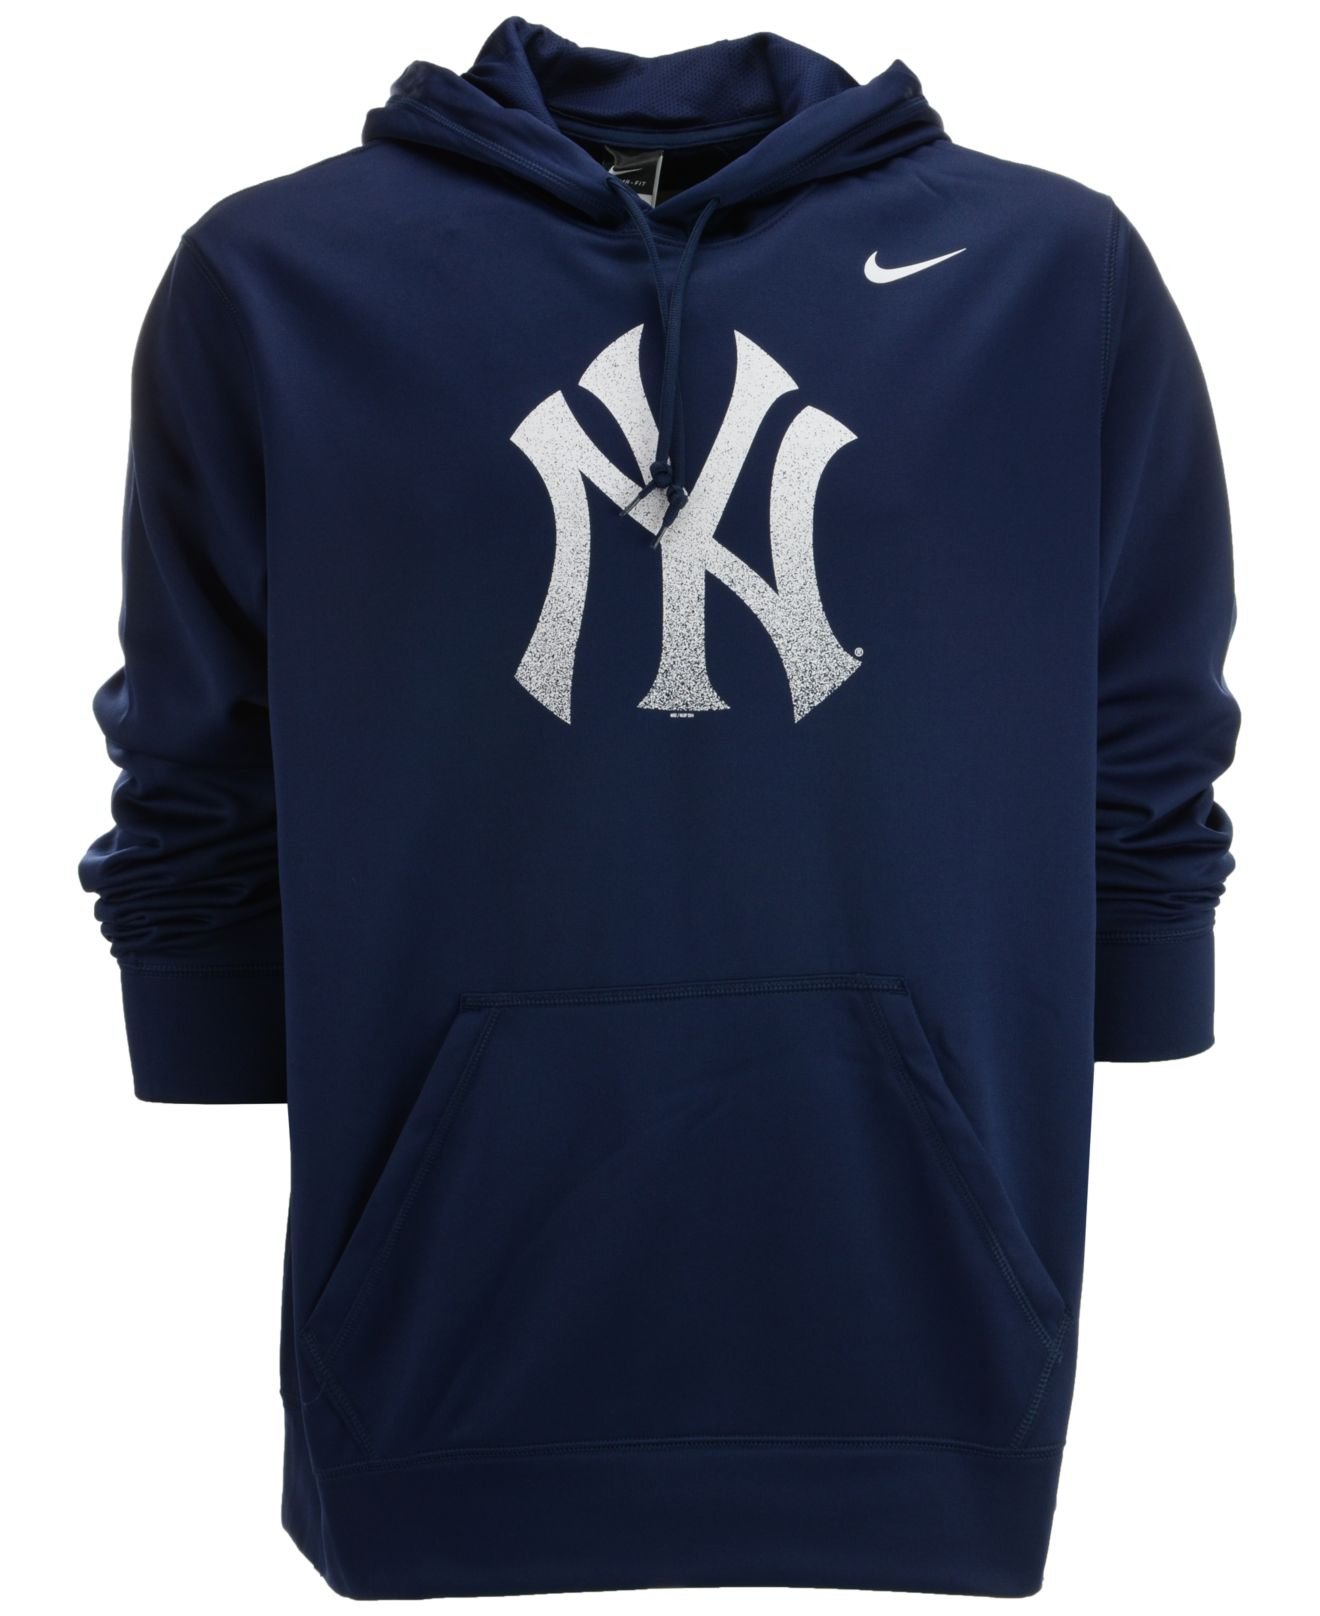 Lyst - Nike Men's New York Yankees Logo Performance Hoodie in Blue for Men